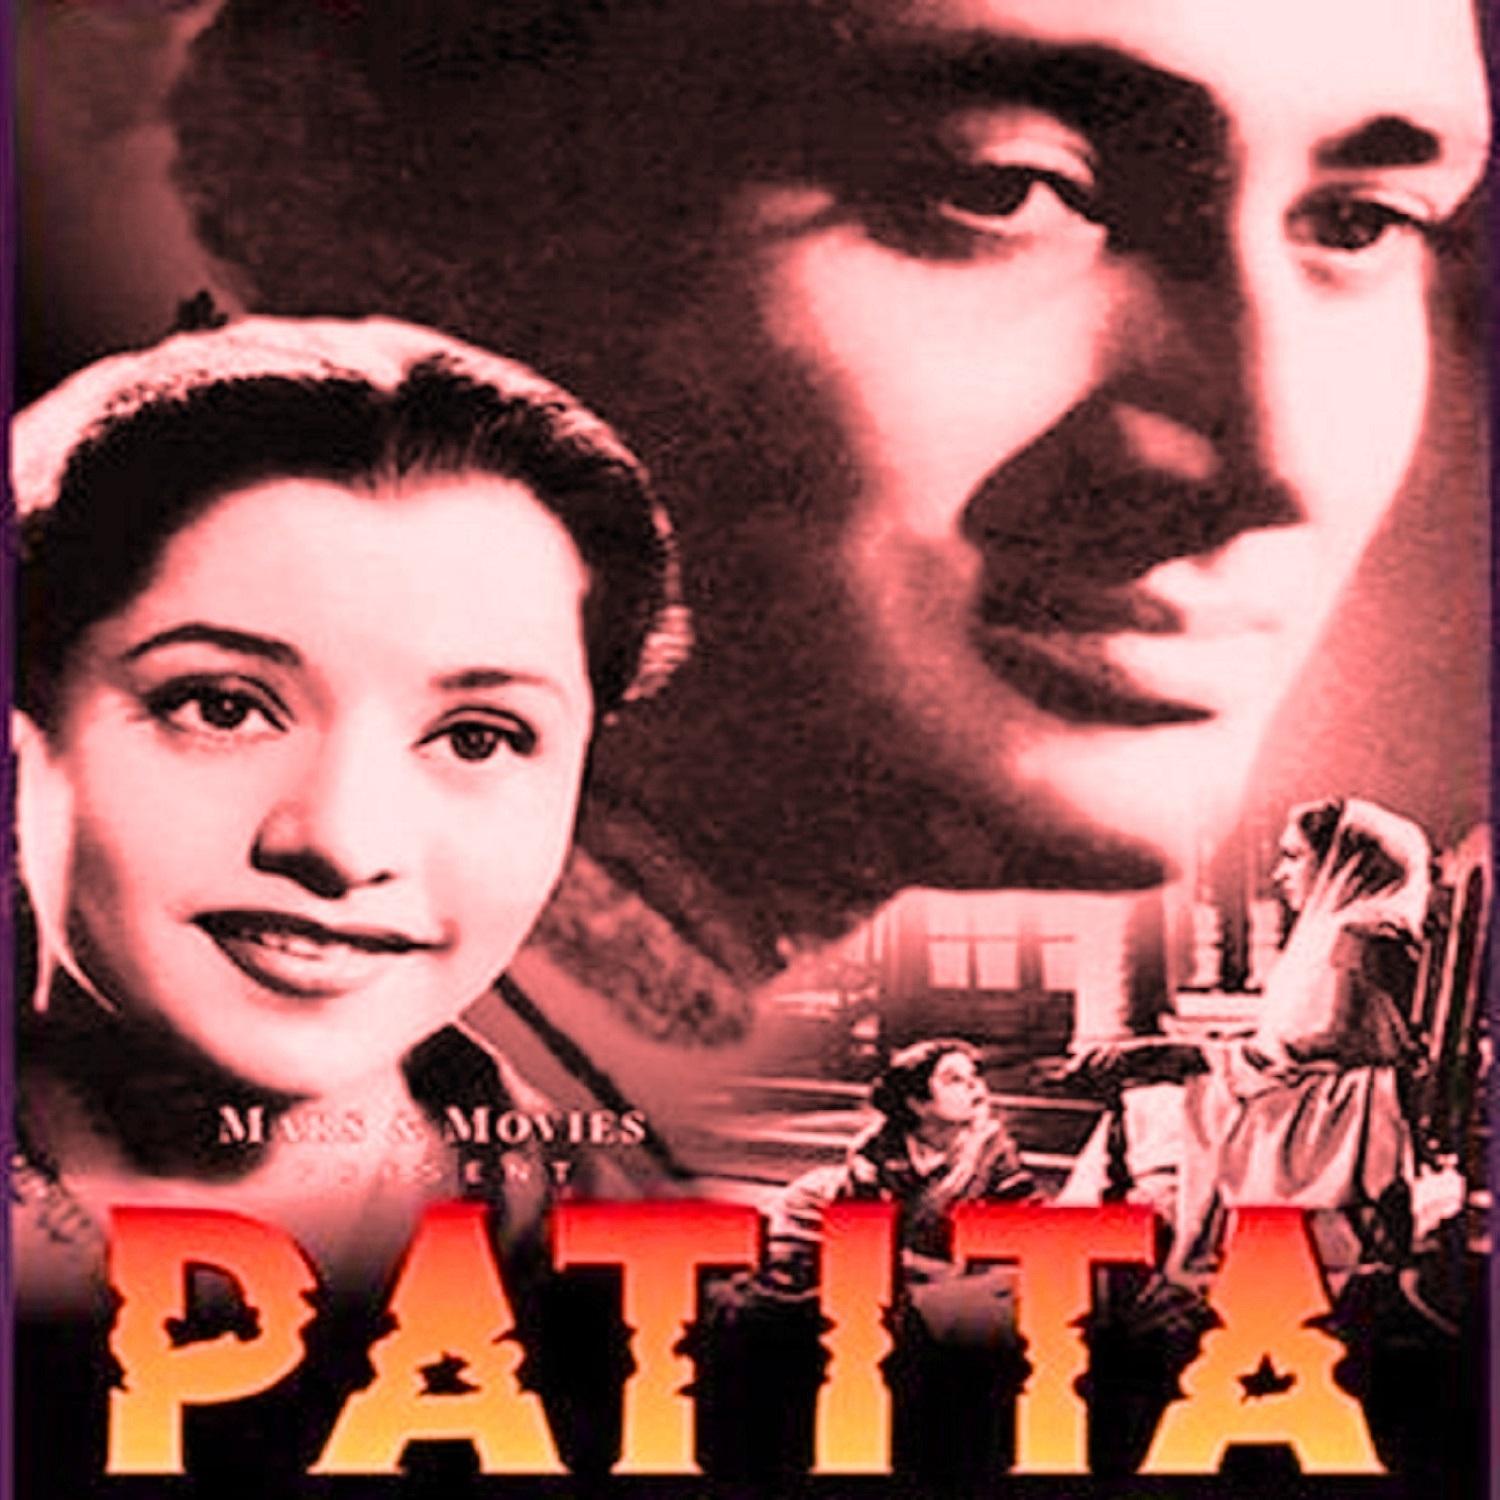 Patita (Original Motion Picture Soundtrack)